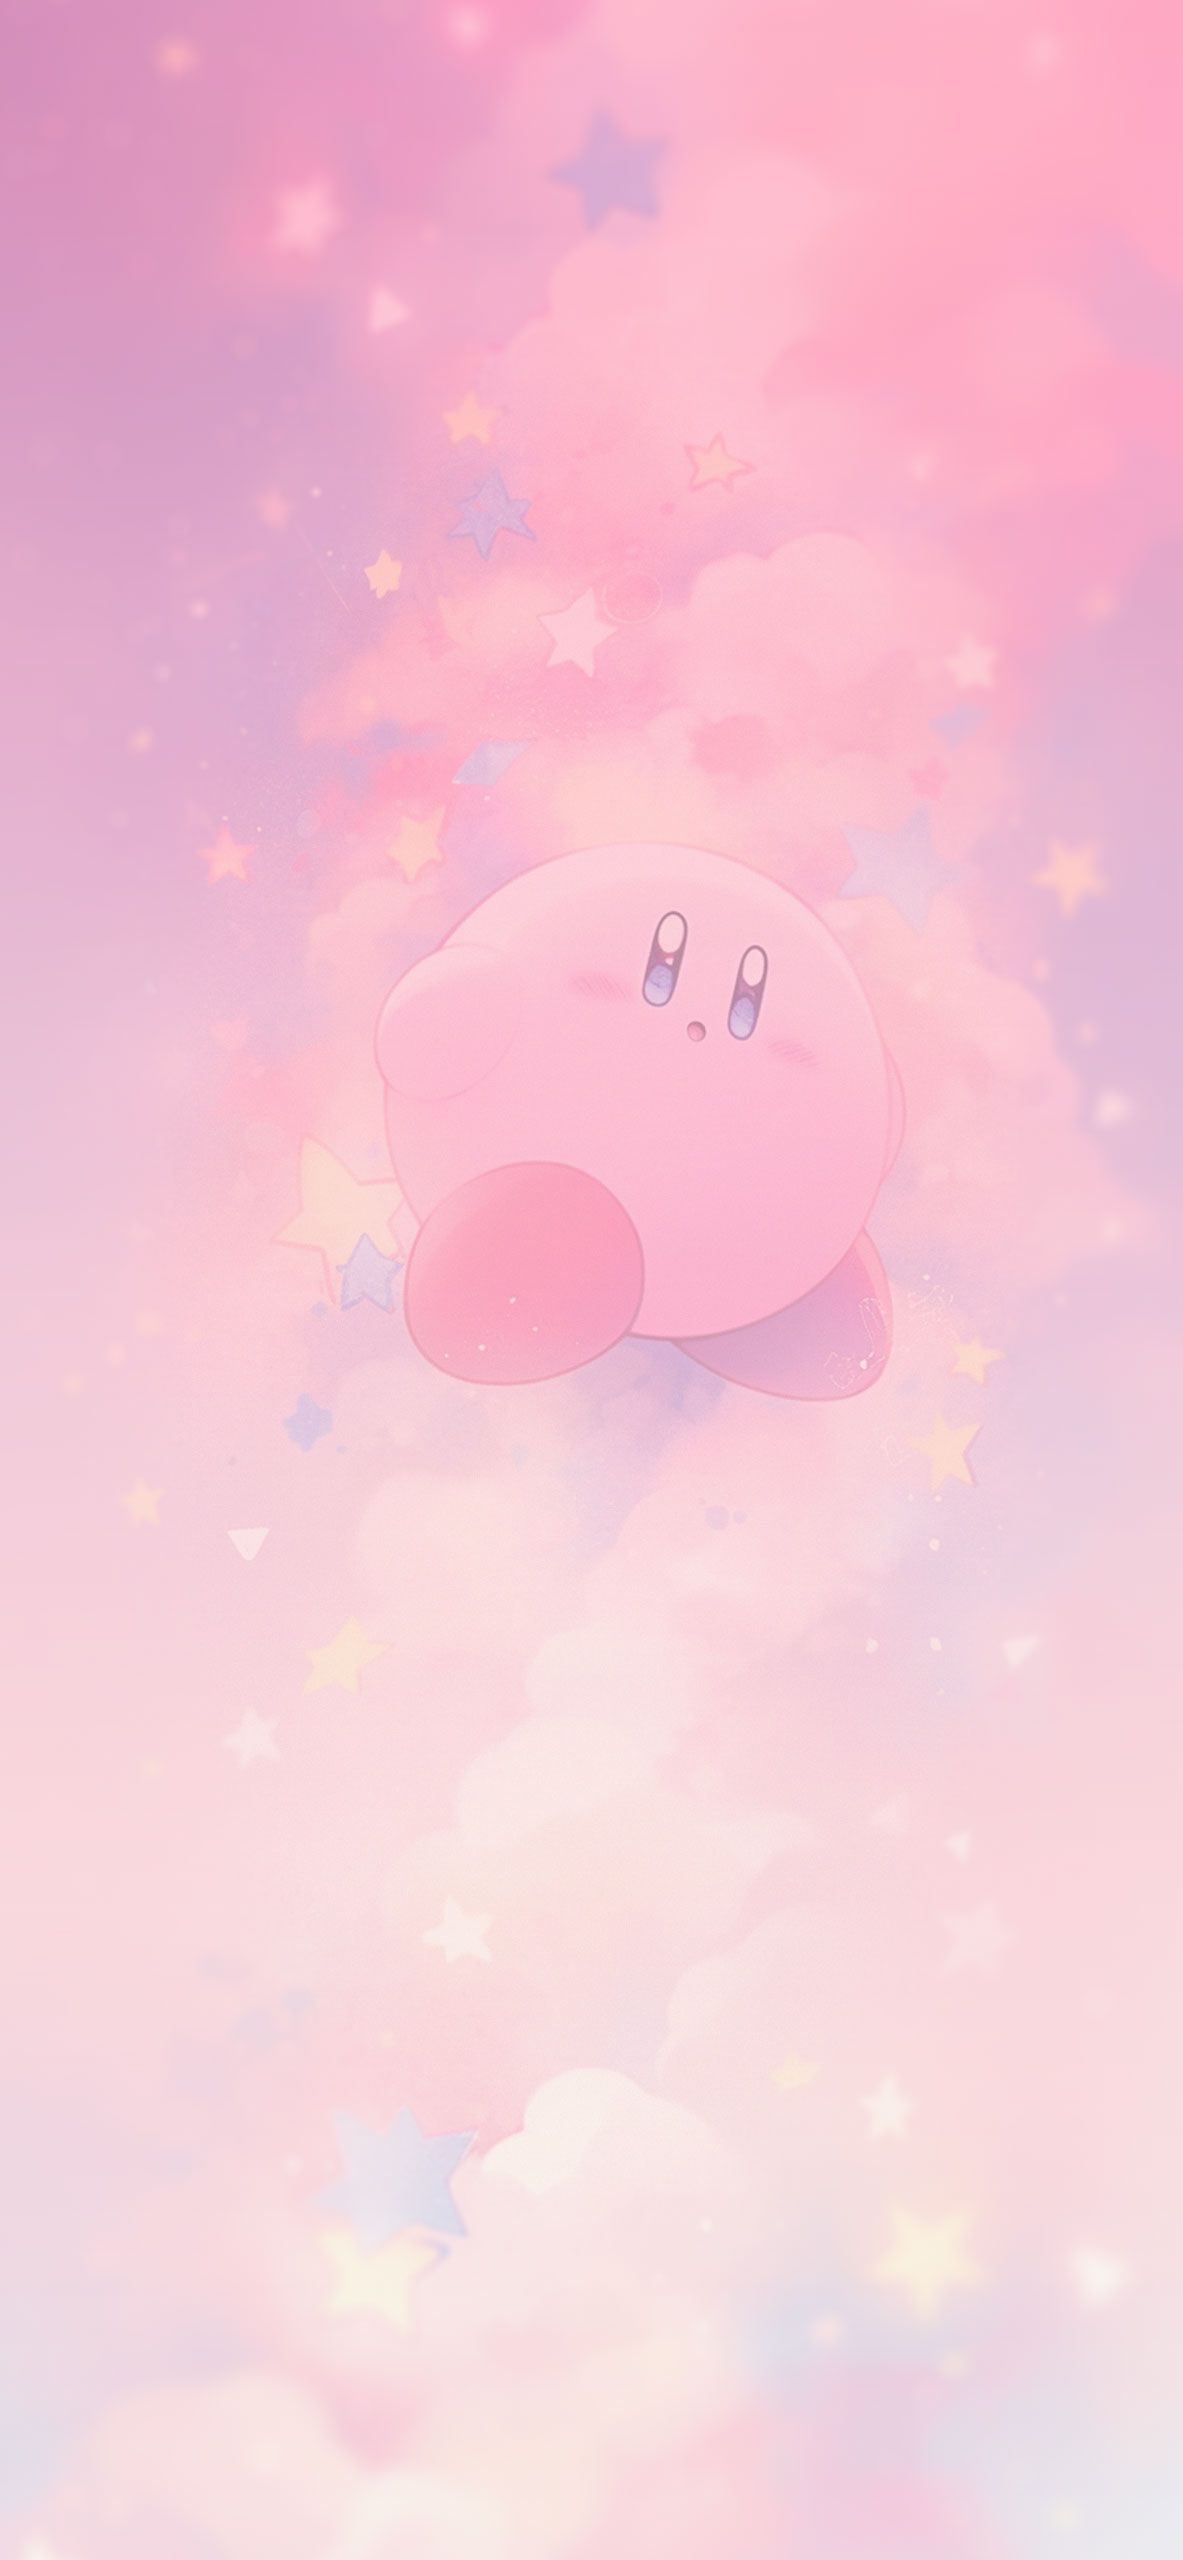 Kirby among Stars Aesthetic Wallpaper Kirby Wallpaper